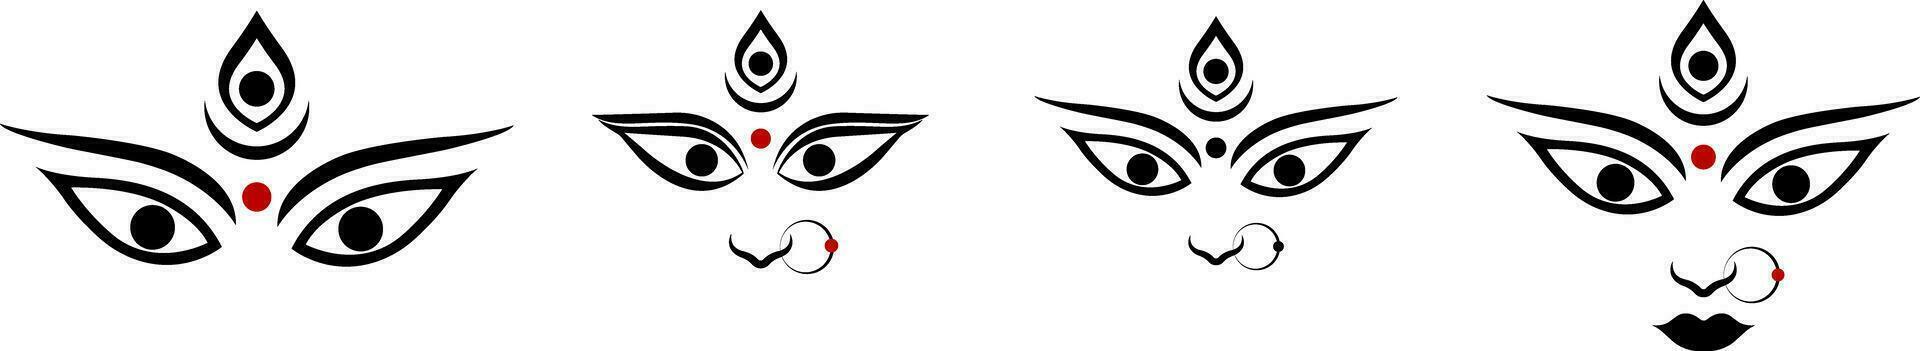 Durga Face illustration for the Happy Durga Puja Celebration vector